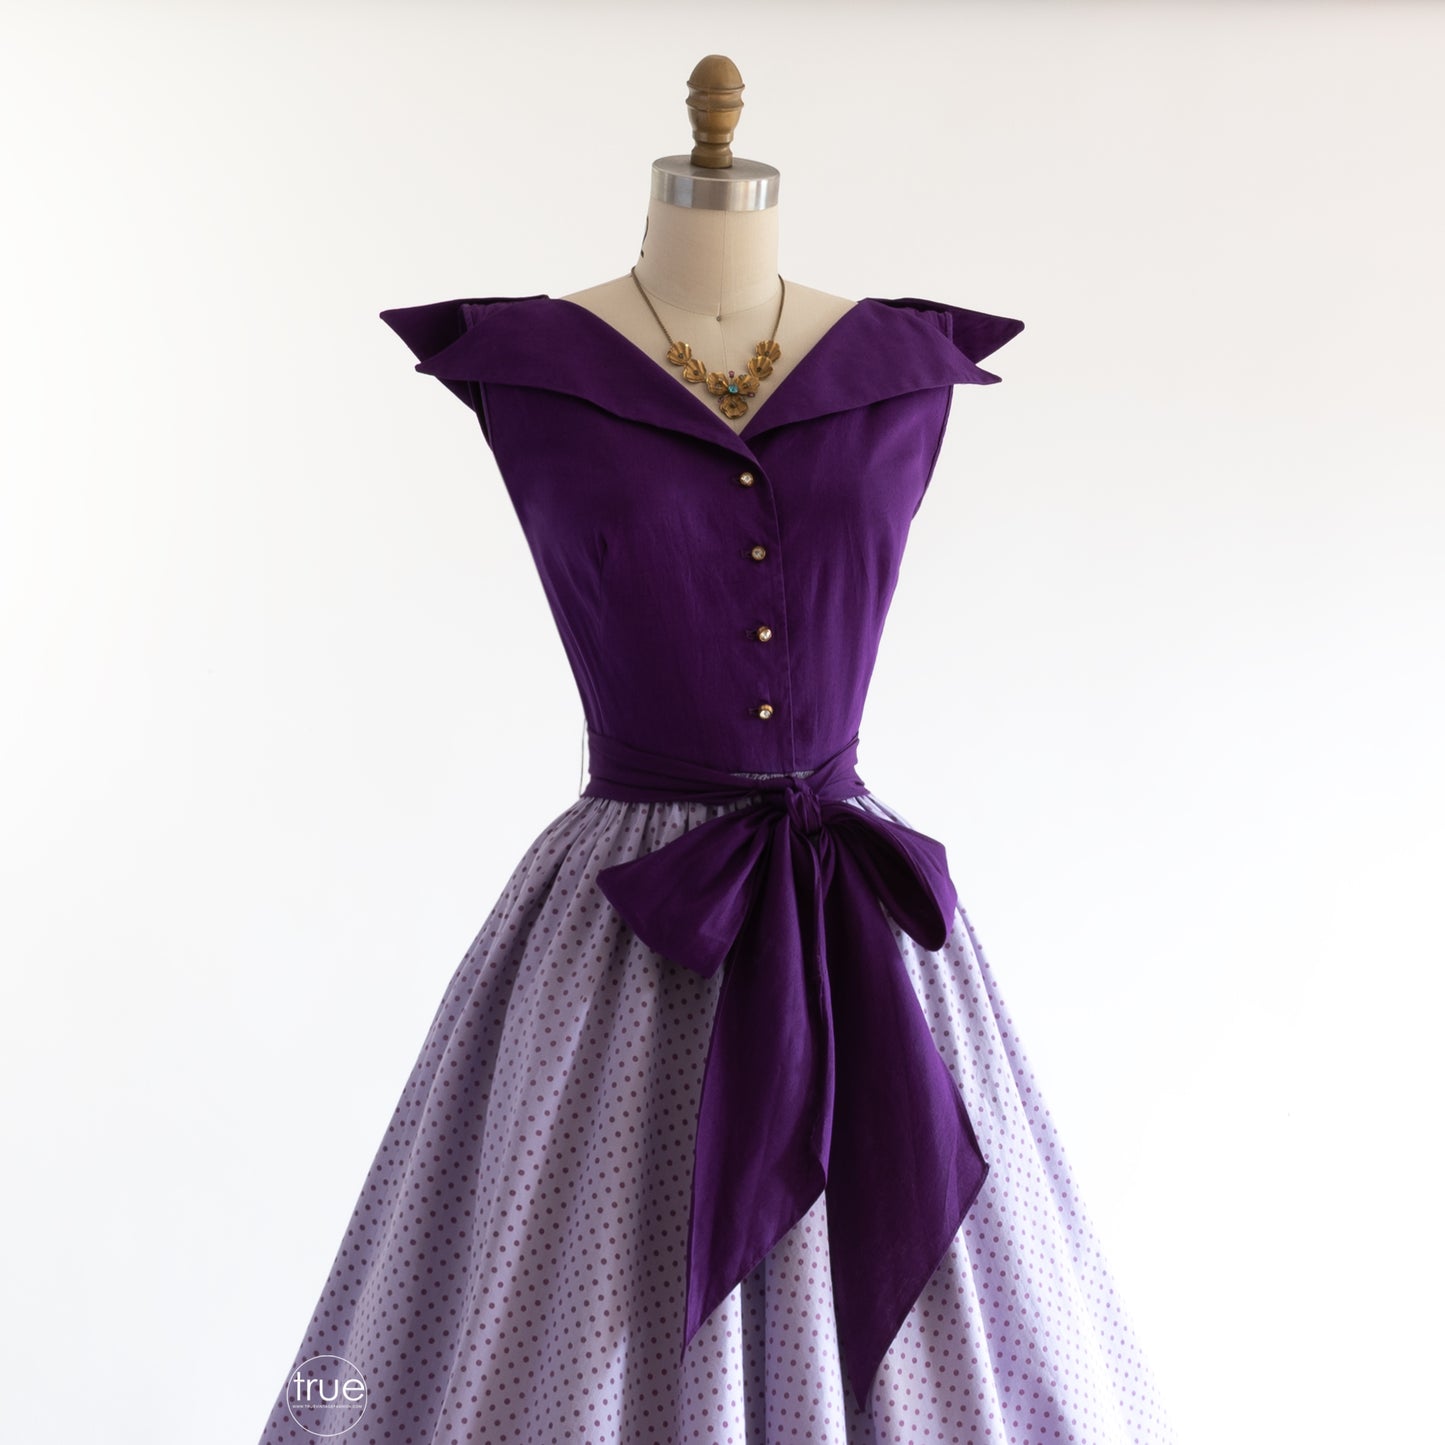 vintage 1940's dress ...purple violet double fin bodice with polka dot skirt